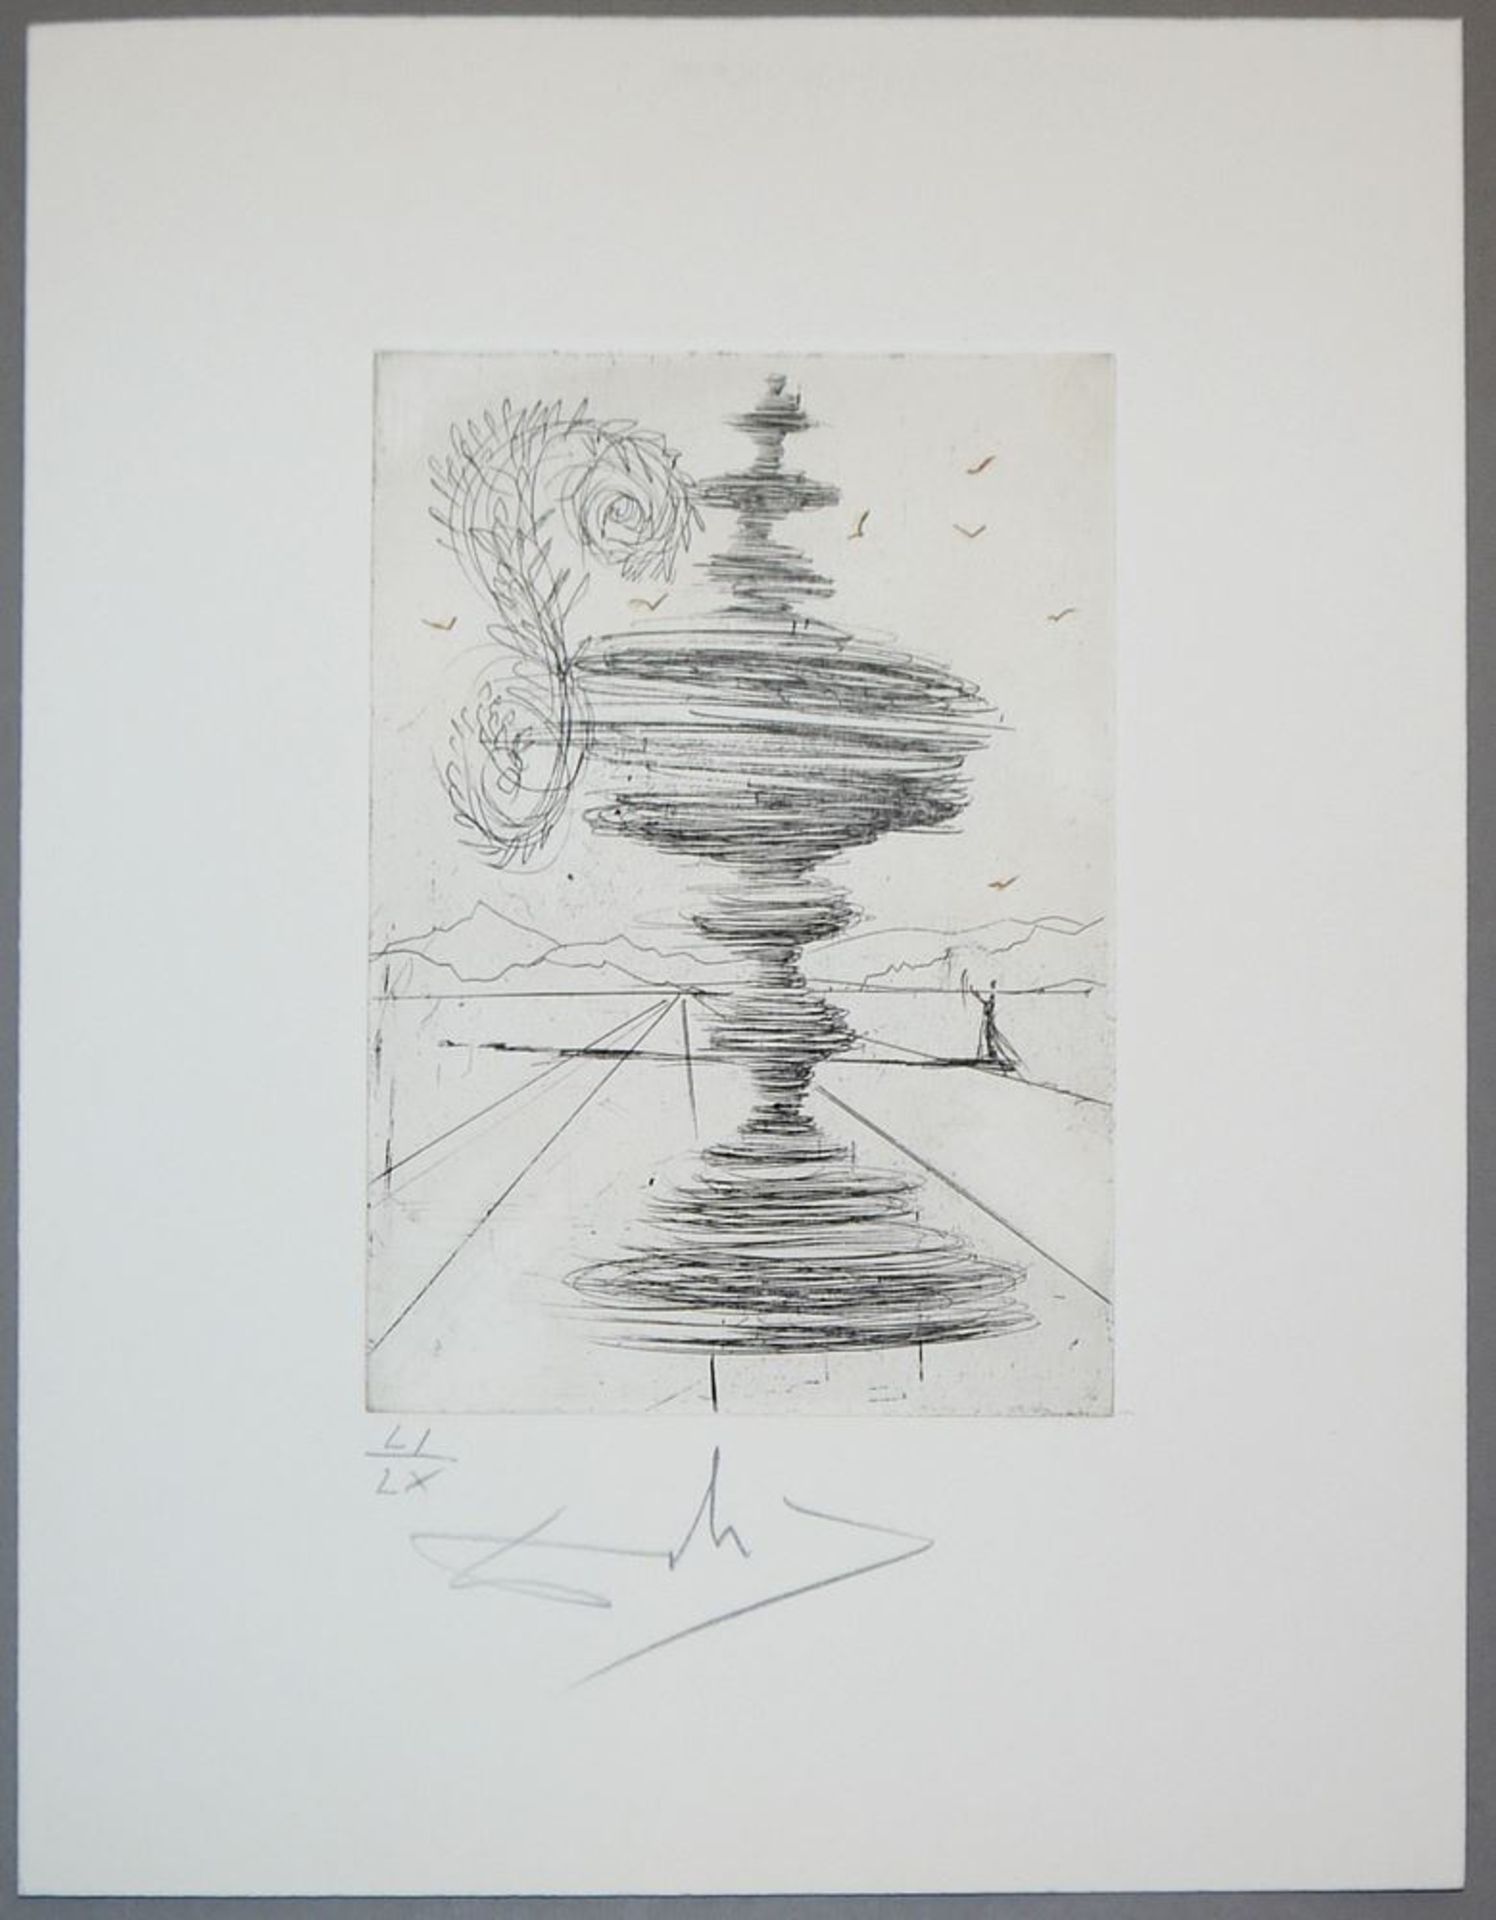 Salvador Dali, "La Fontaine", signierte Aquatintaradierung von 1966